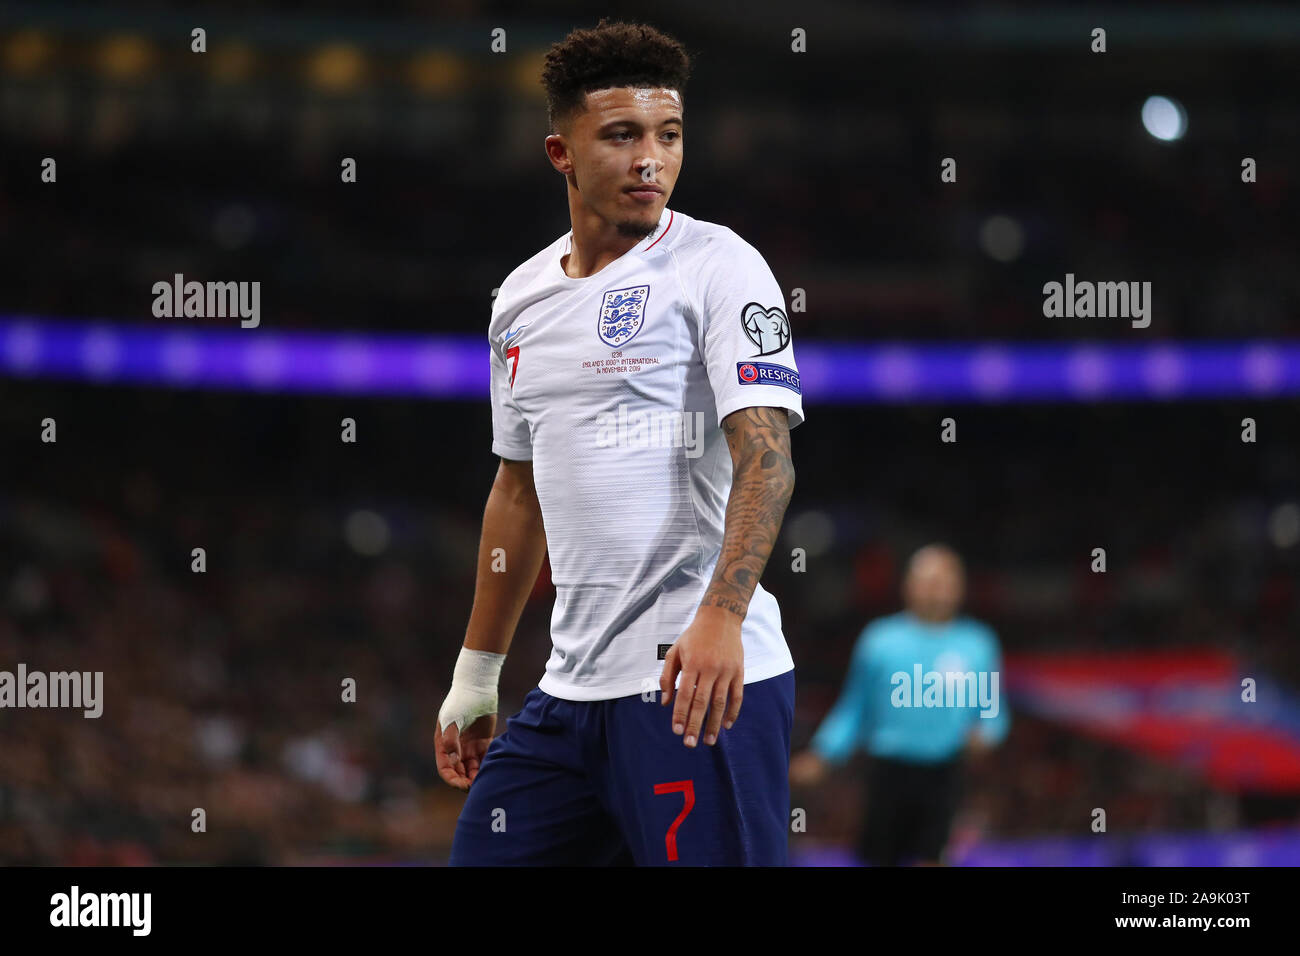 Jadon Sancho of England - England v Montenegro, UEFA Euro 2020 Qualifier - Group A, Wembley Stadium, London, UK - 14th November 2019  Editorial Use Only Stock Photo